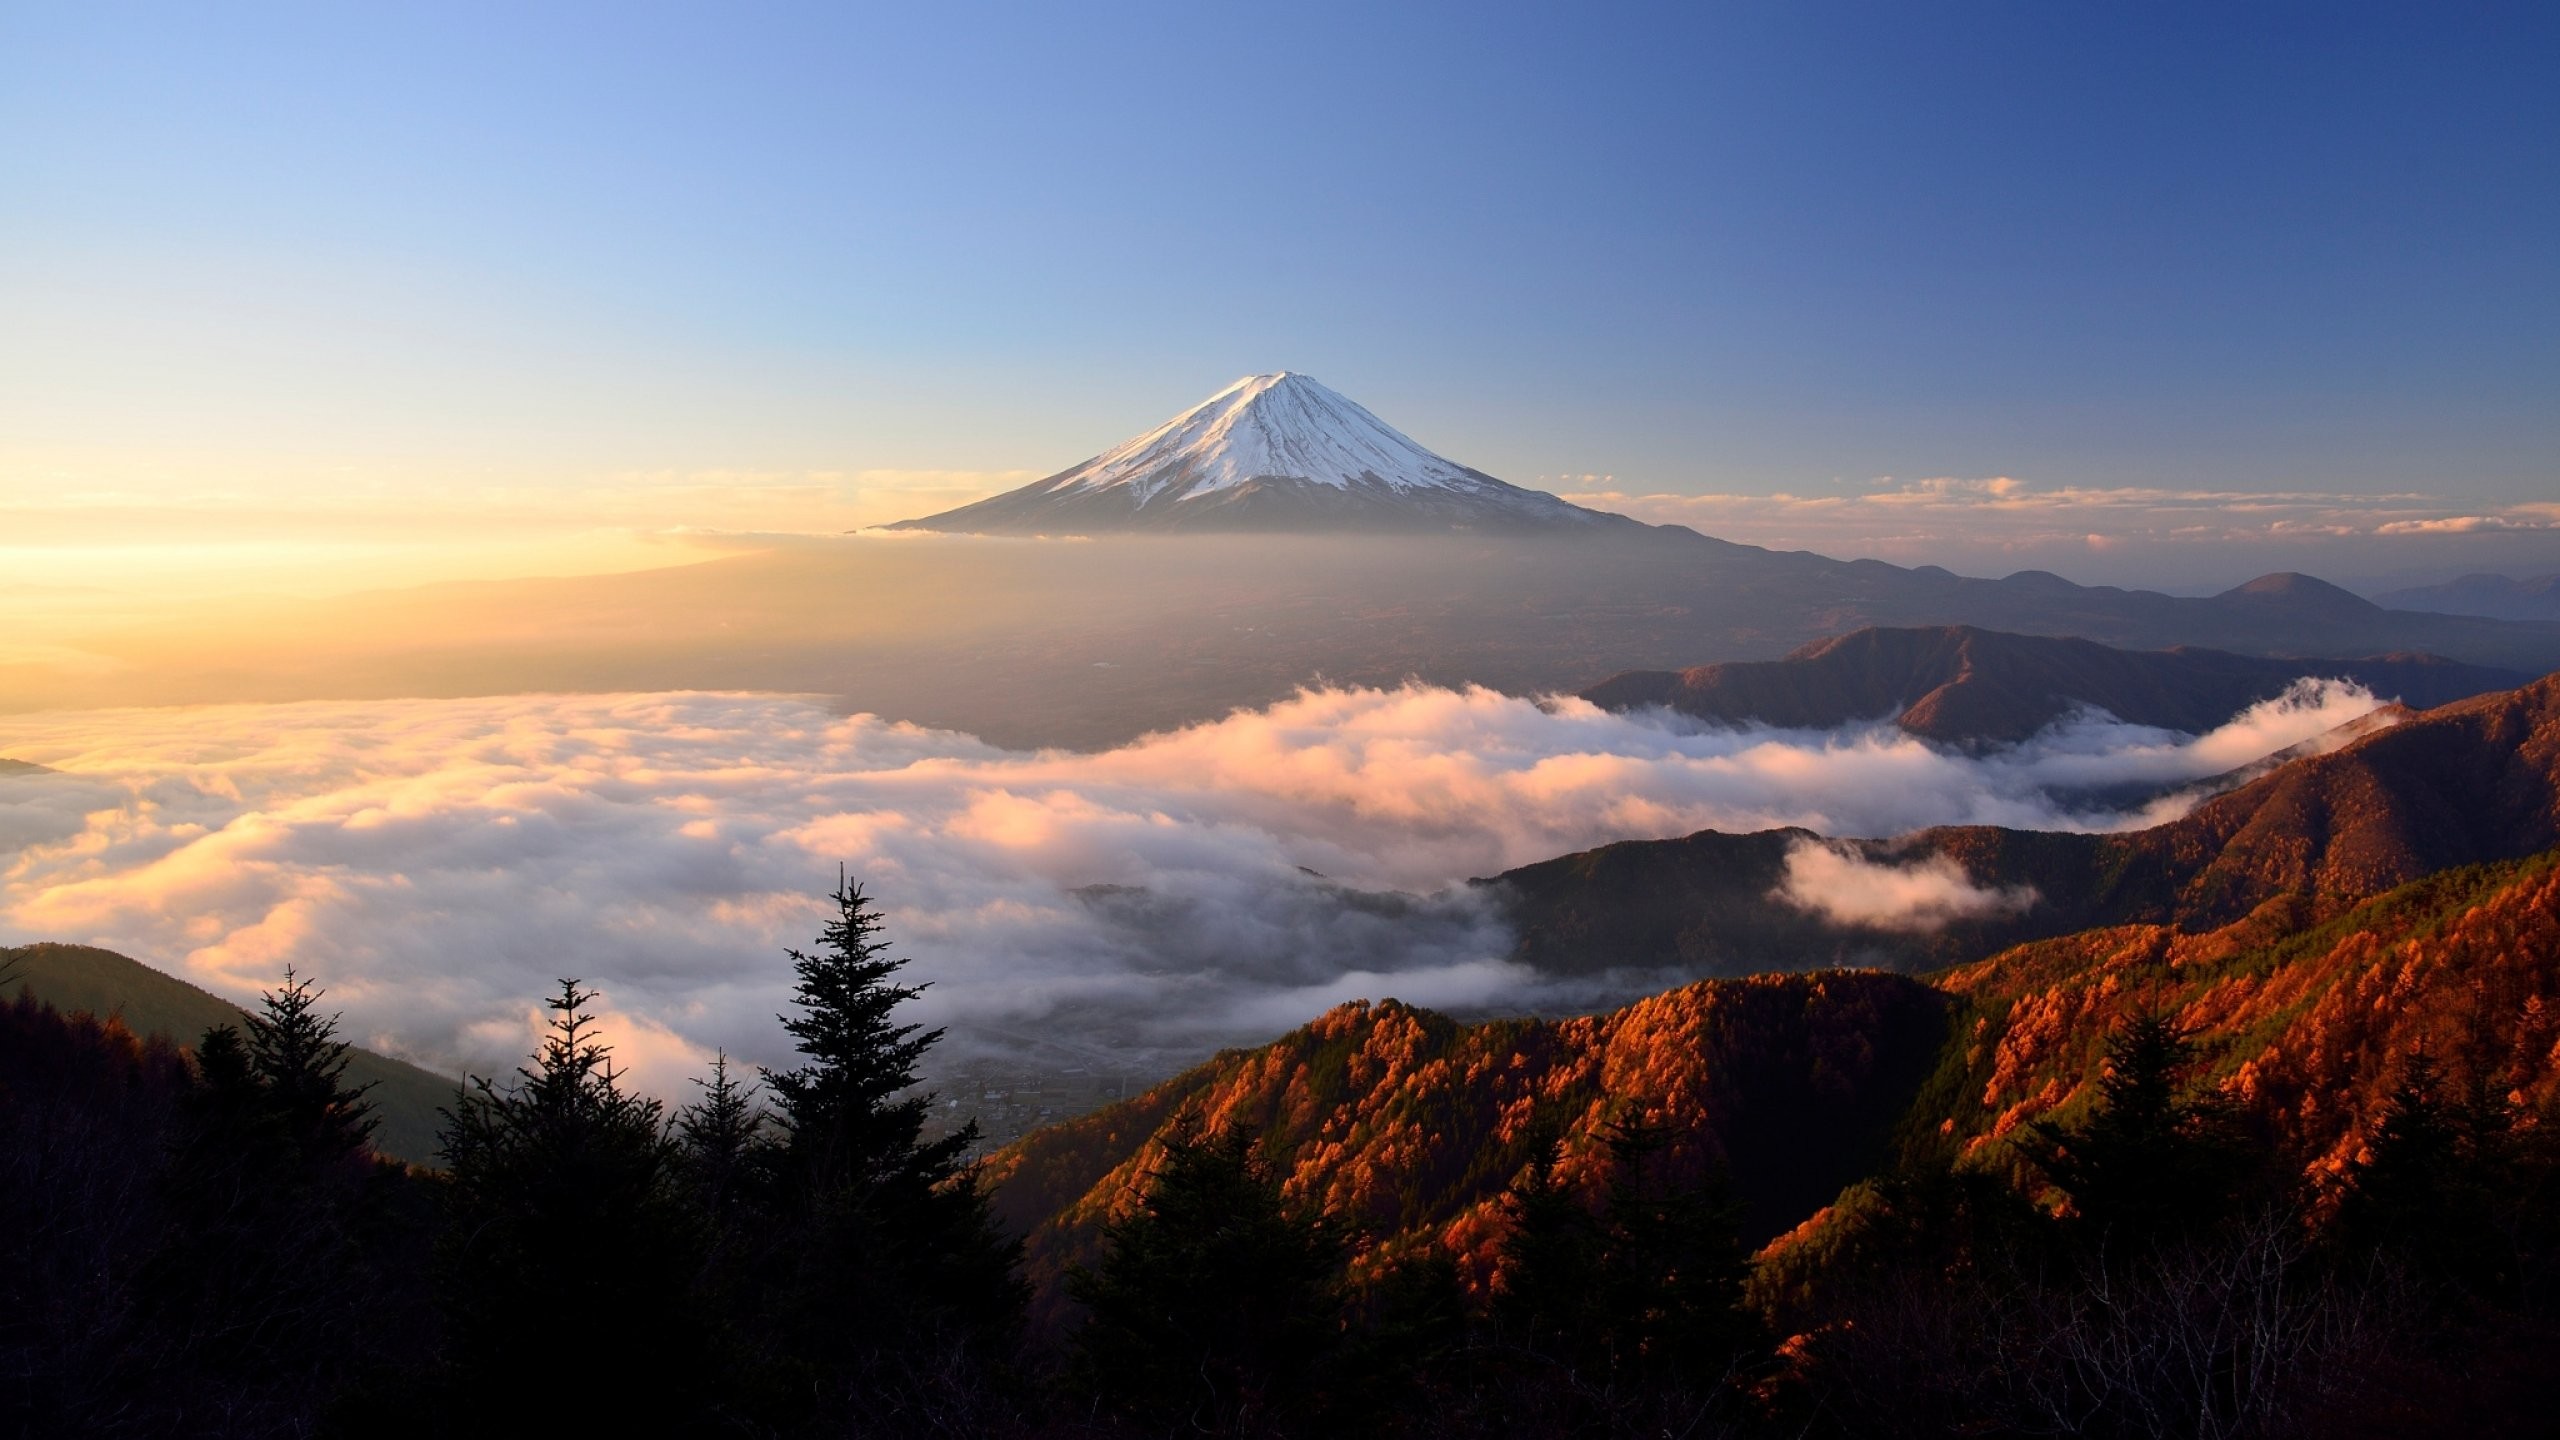 General 2560x1440 Mount Fuji clouds trees sky nature landscape mist sunlight Japan sunrise mountains Asia snowy peak snowy mountain volcano